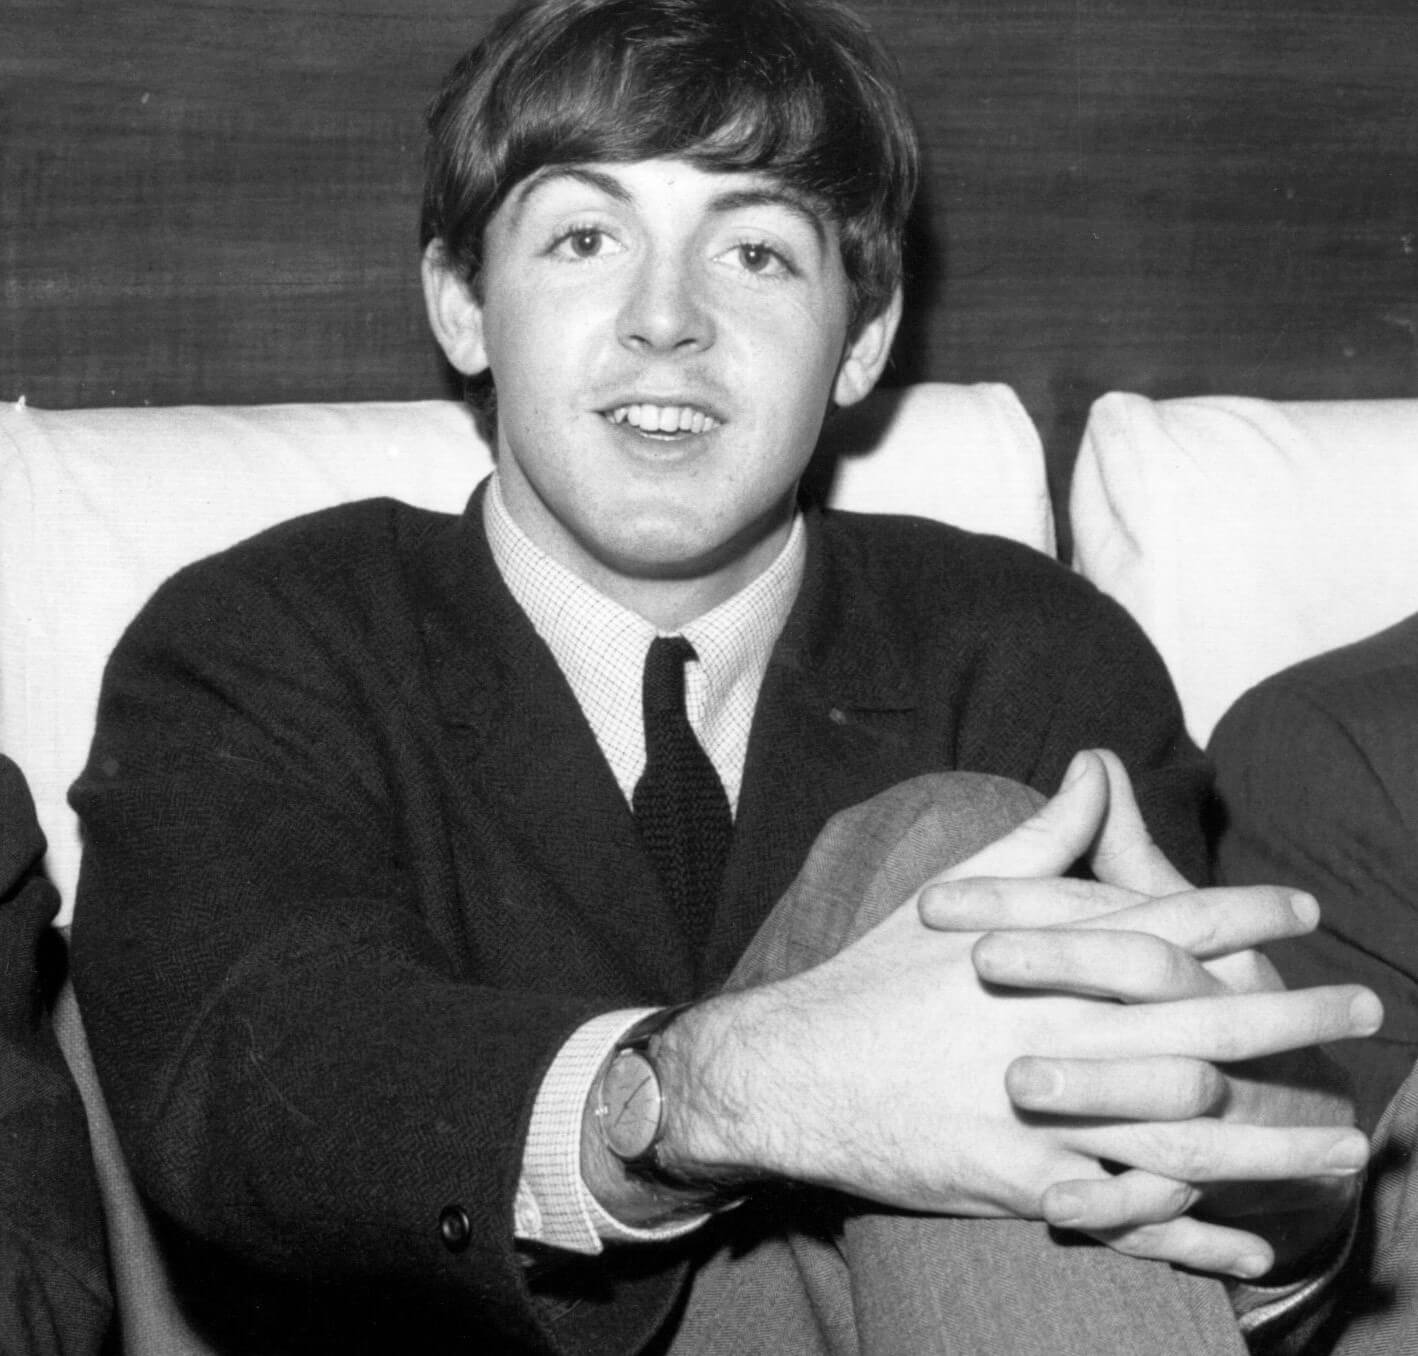 The Beatles' Paul McCartney in a suit